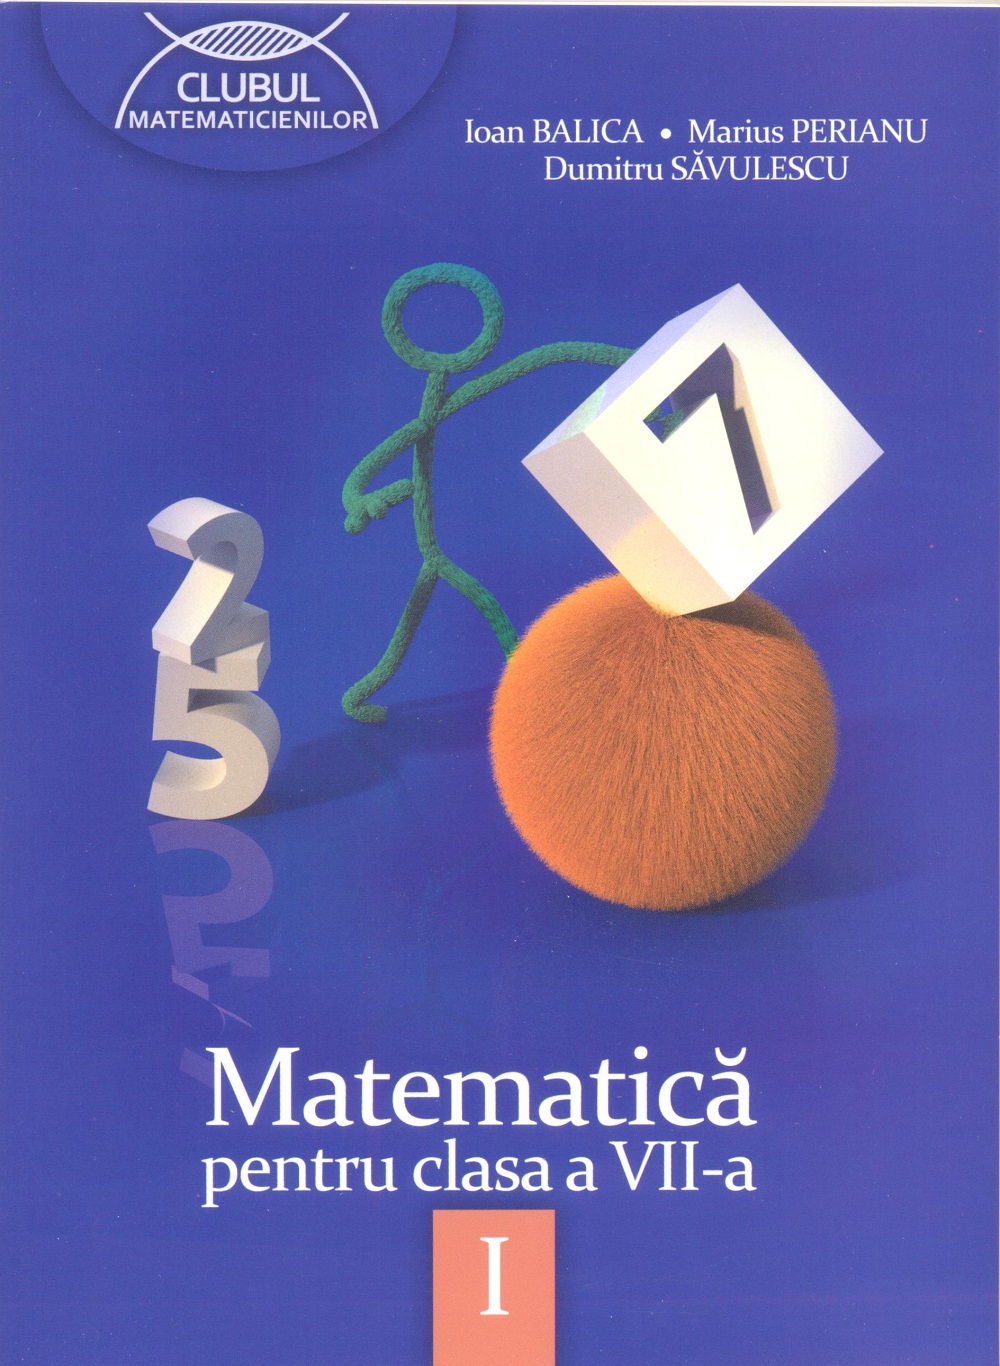 Matematica pentru clasa a VII-a - Clubul matematicienilor. Semestrul I